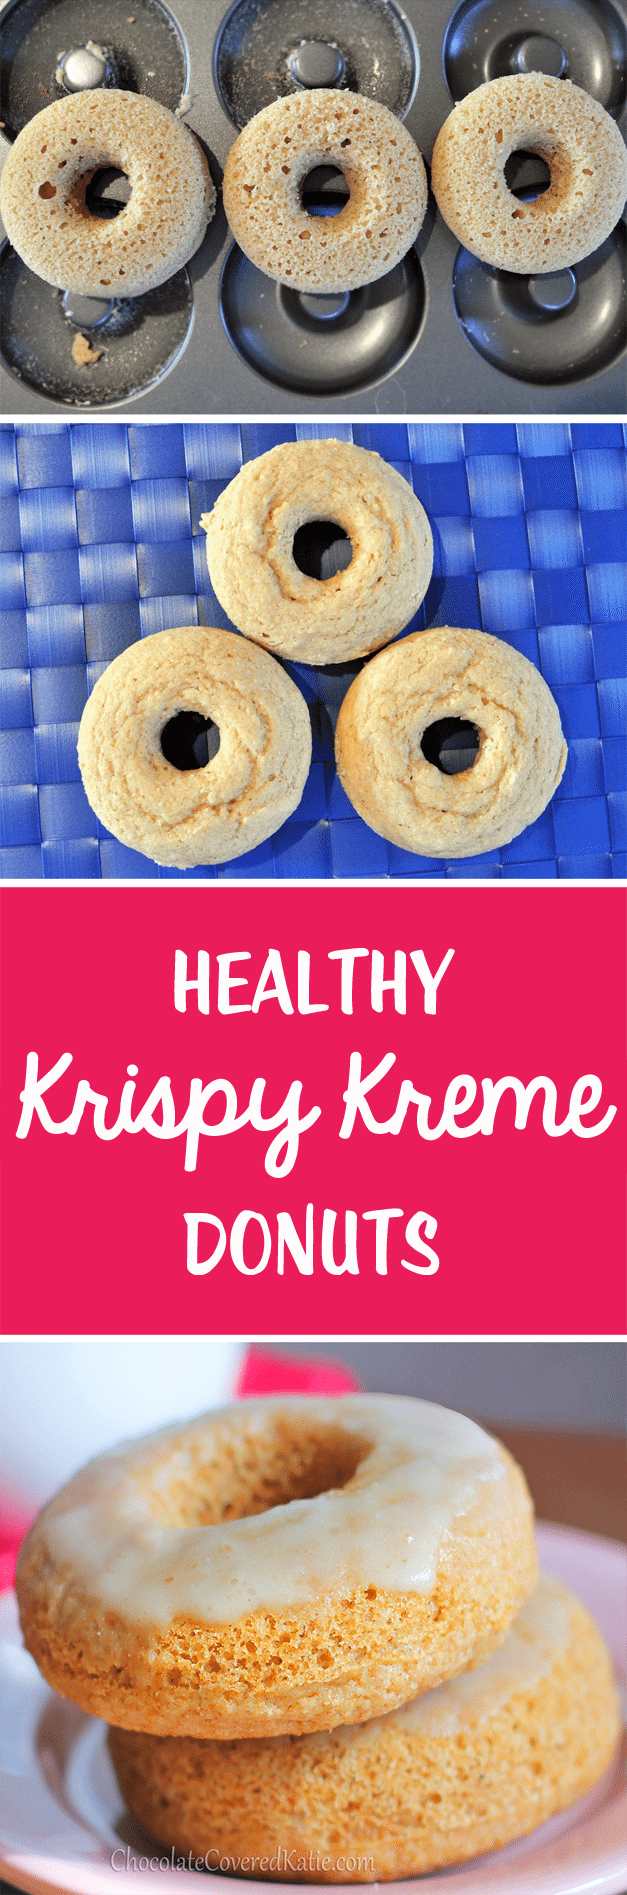 Healthy Krispy Kreme Donuts - 1 cup flour, 1 tsp vanilla extract, 1 1/2 tsp baking powder, 1/3 cup... Full recipe: https://chocolatecoveredkatie.com/2013/02/22/homemade-krispy-kreme-doughnuts-the-healthy-version/ @choccoveredkt